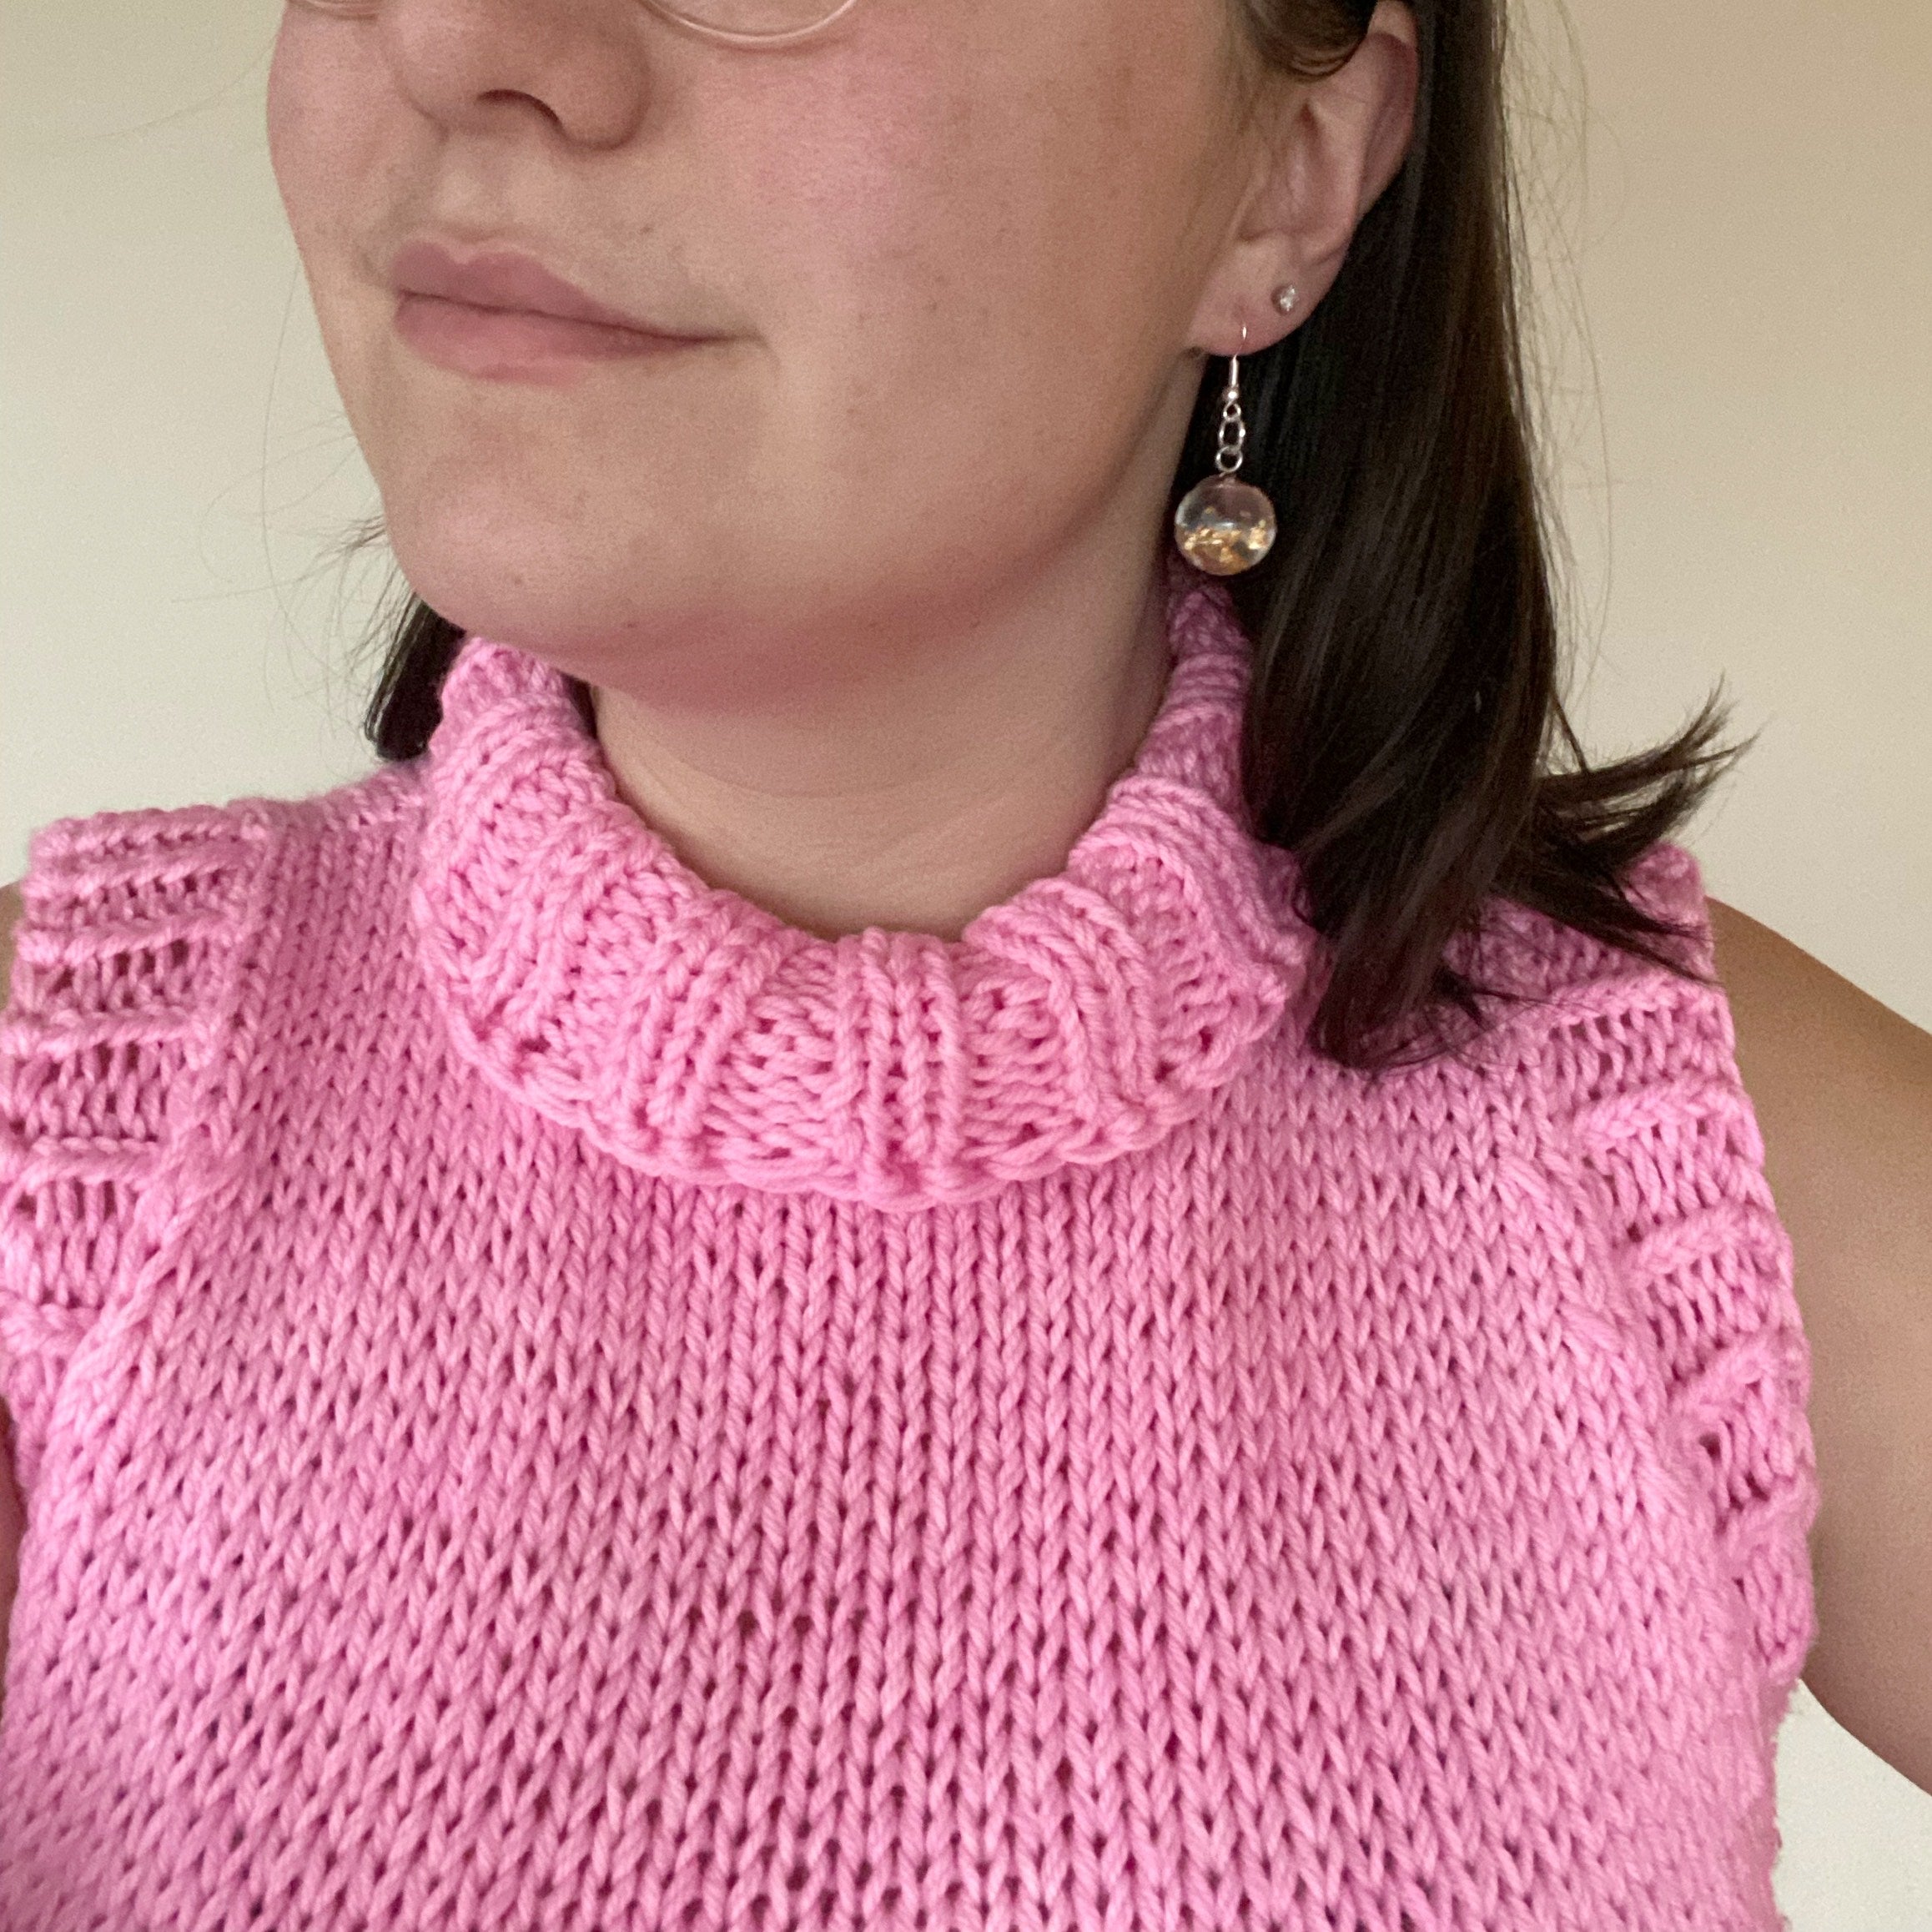 She's So Lucky Vest | Knitting Pattern